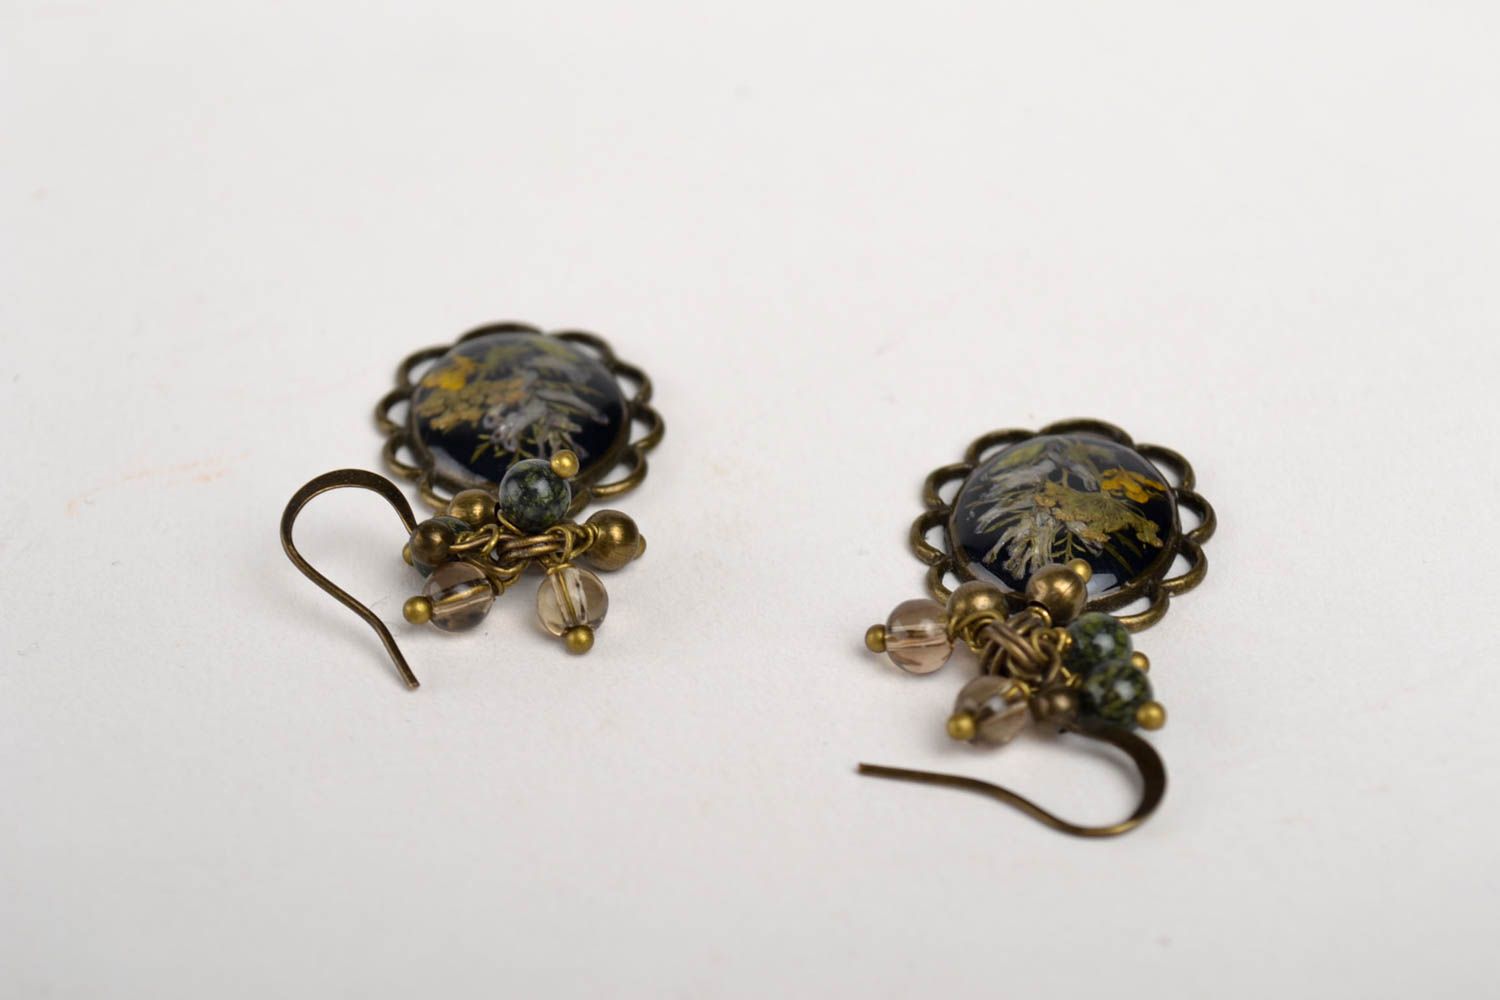 Handmade earrings with charms unusual beautiful earrings stylish jewelry photo 4